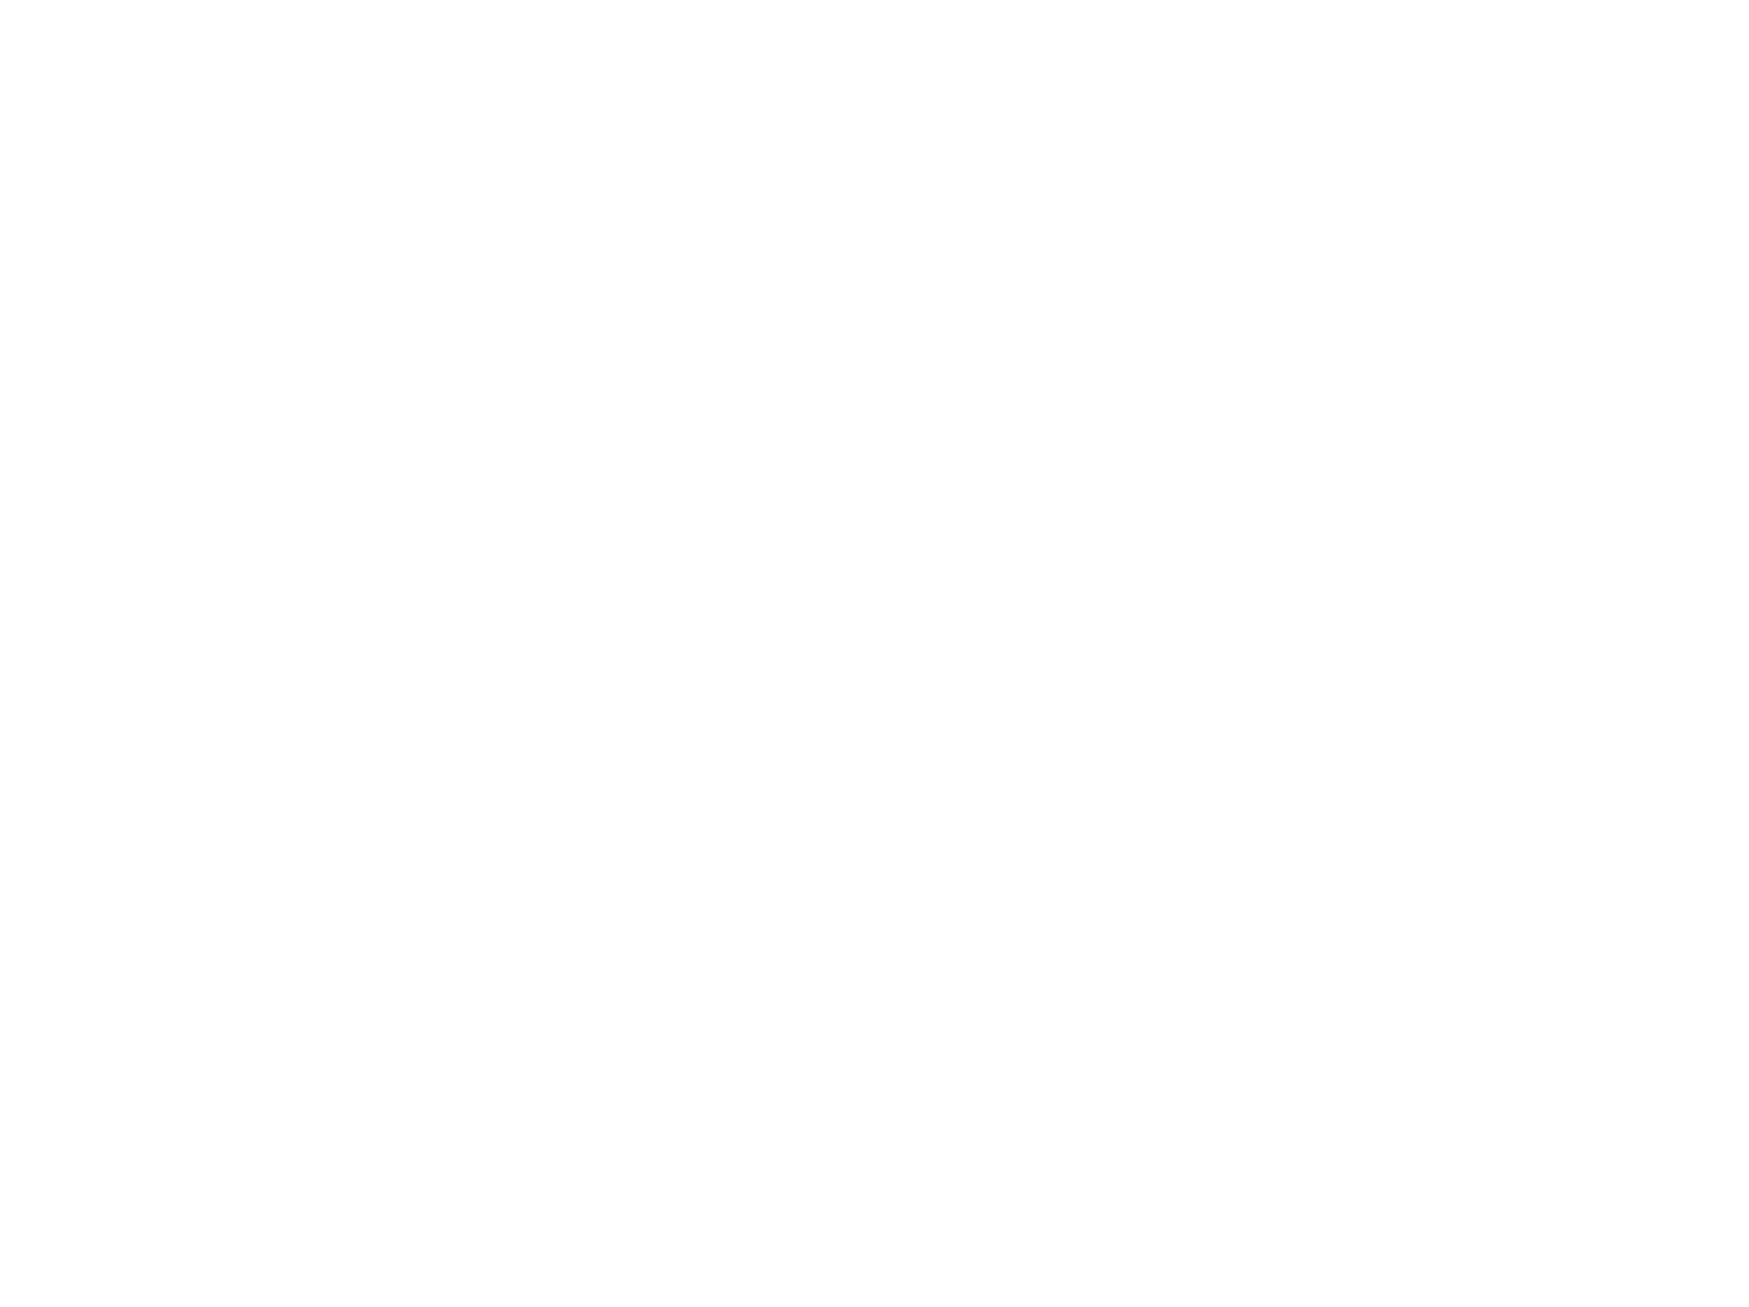 Michelangelo's Sistine Chapel: Chicago Exhibit